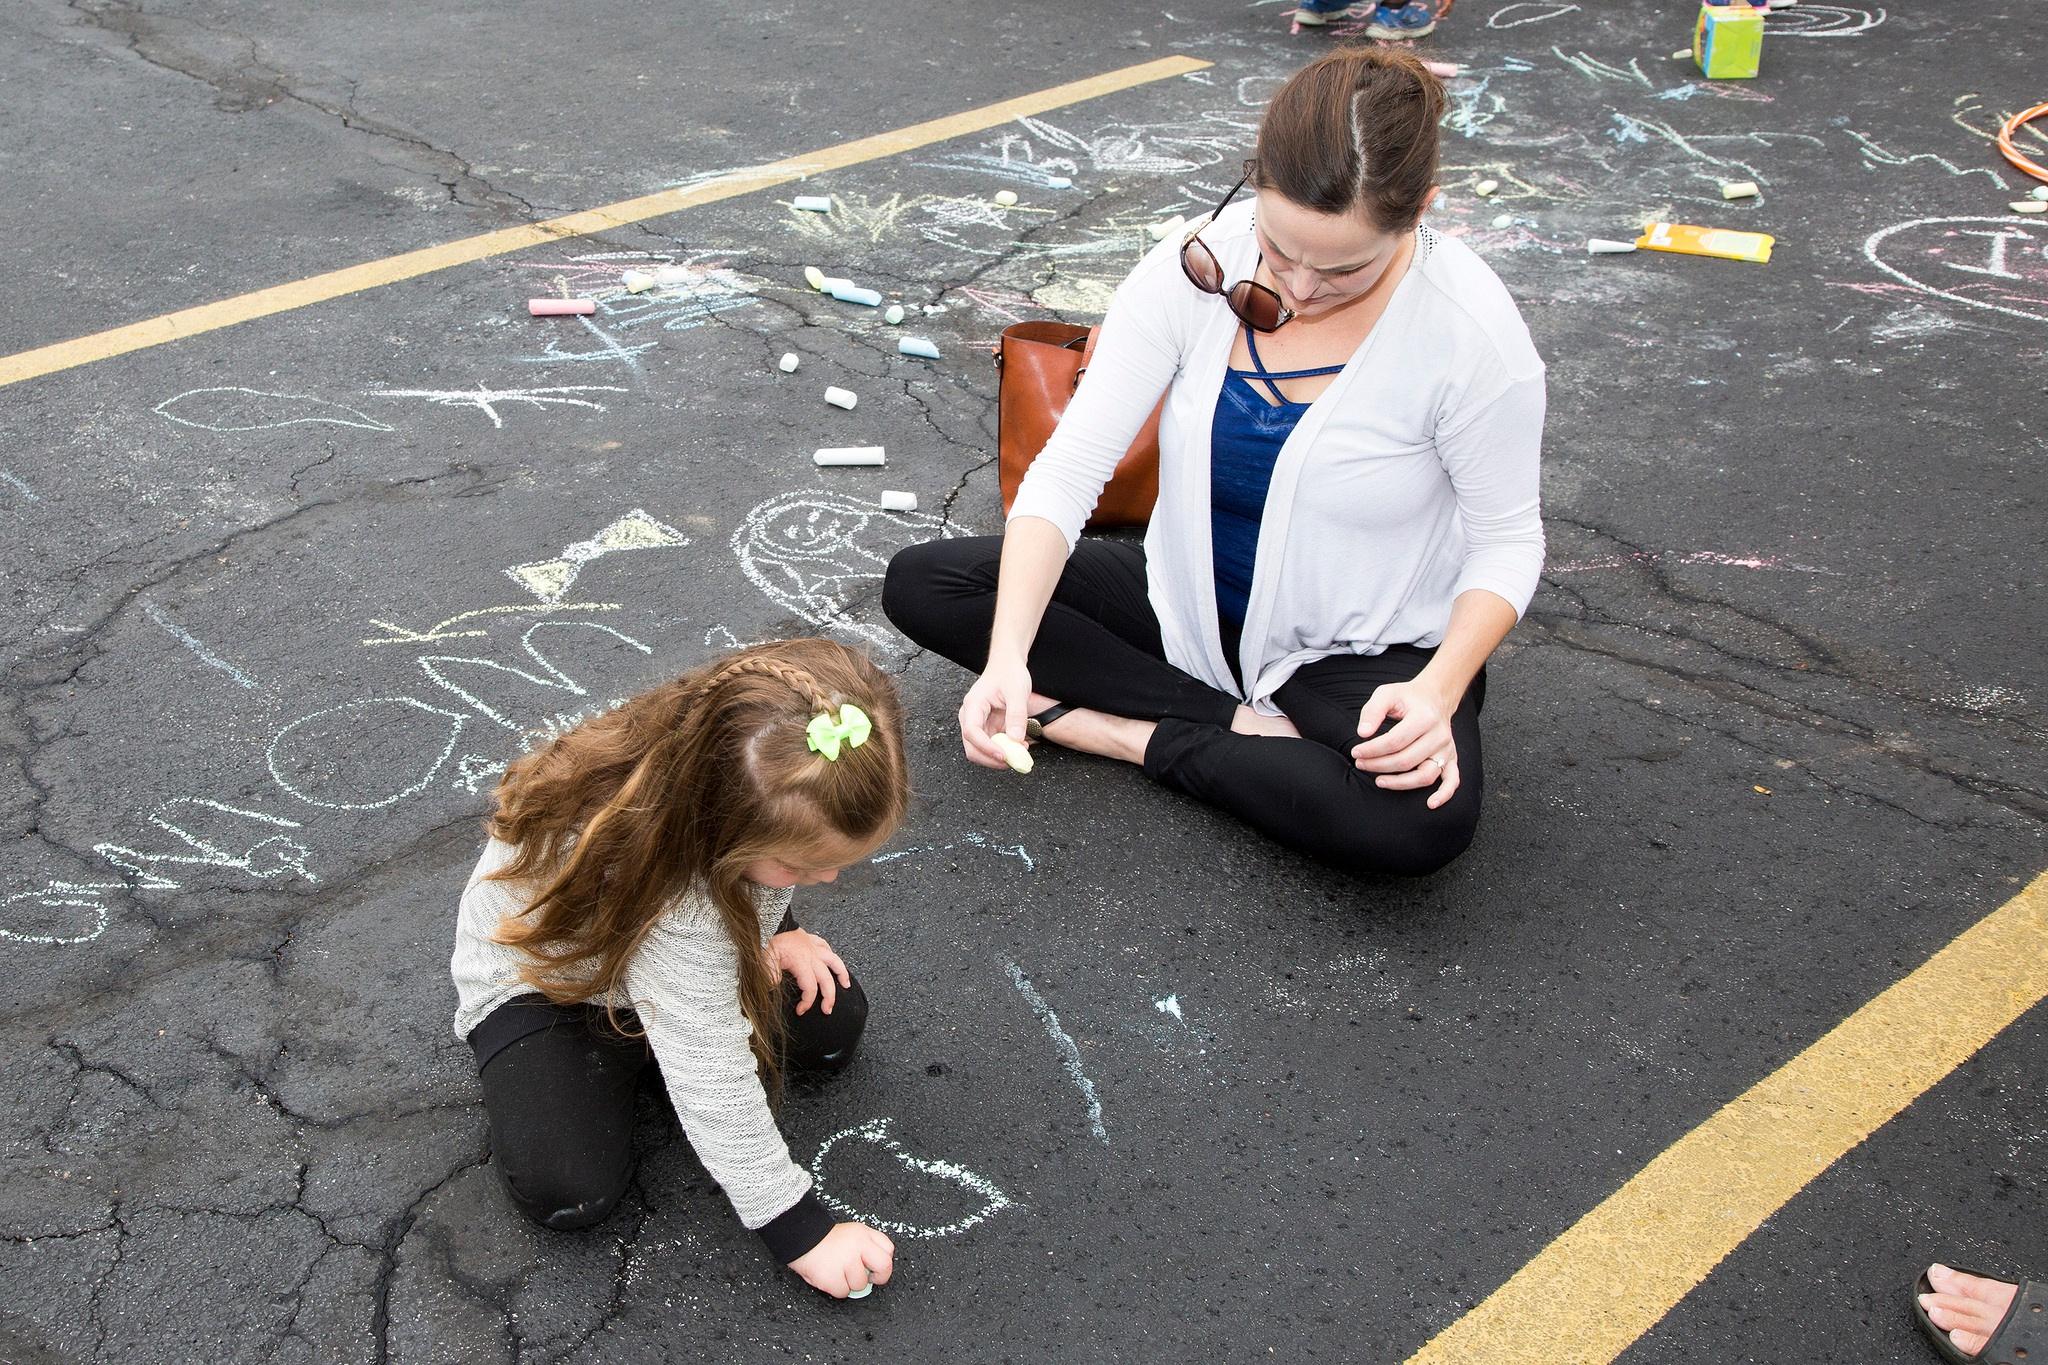 Sidewalk chalk art - mom and girl